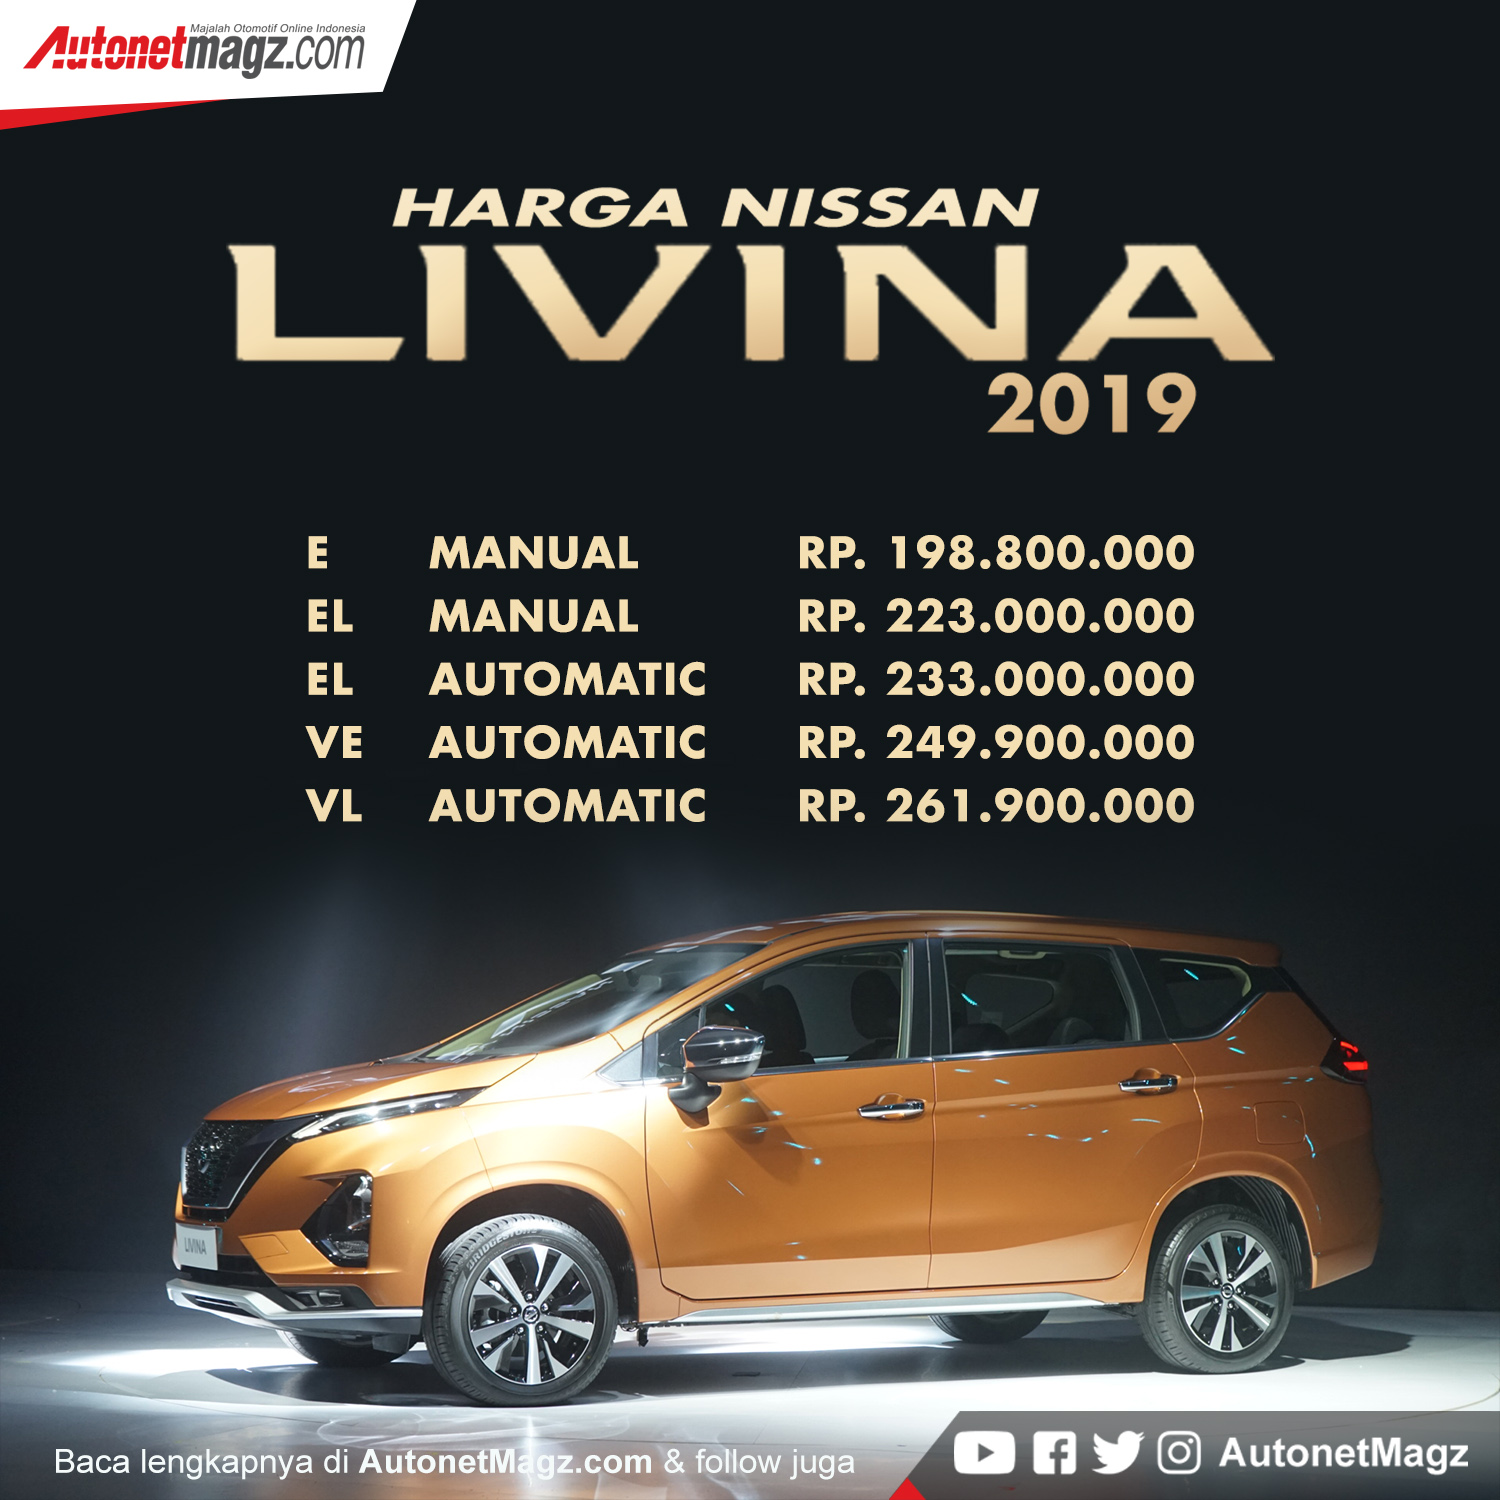 Berita, Harga Nissan Livina 2019: Nissan Livina 2019 Resmi Dirilis, Harga Mepet Mitsubishi Xpander!